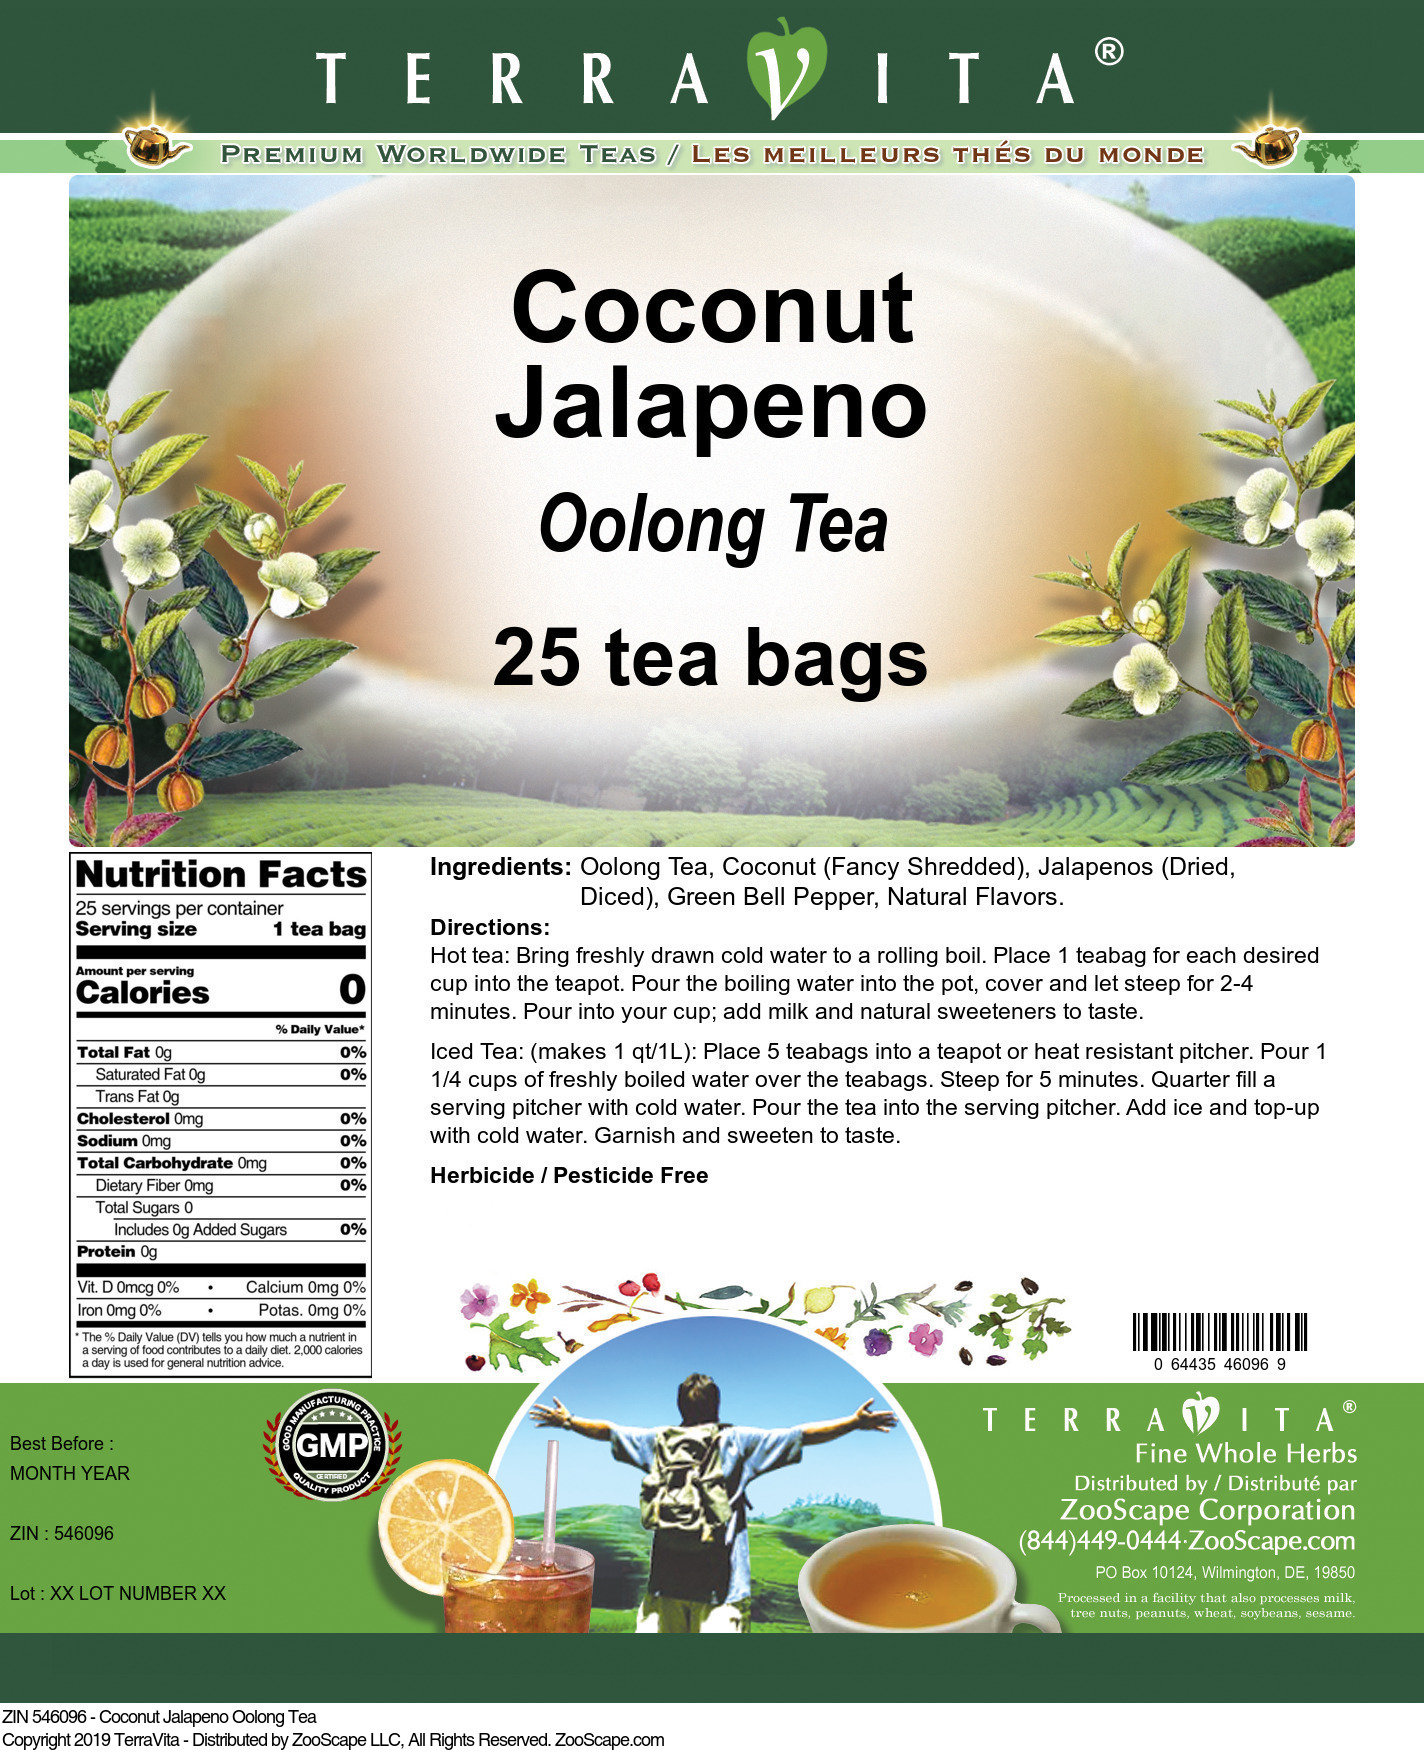 Coconut Jalapeno Oolong Tea - Label